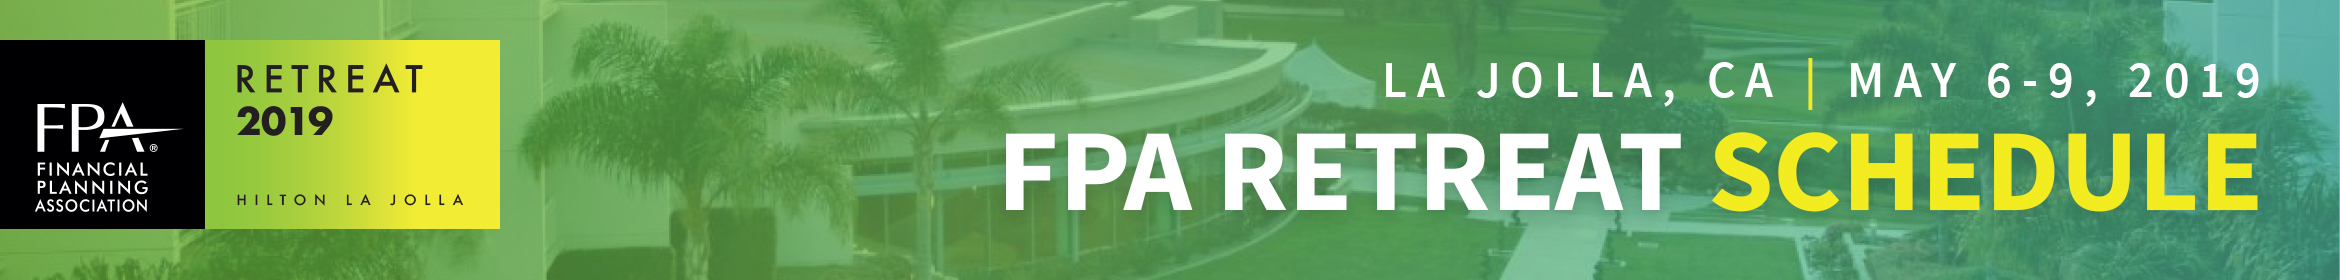 FPA Retreat 2019 Main banner